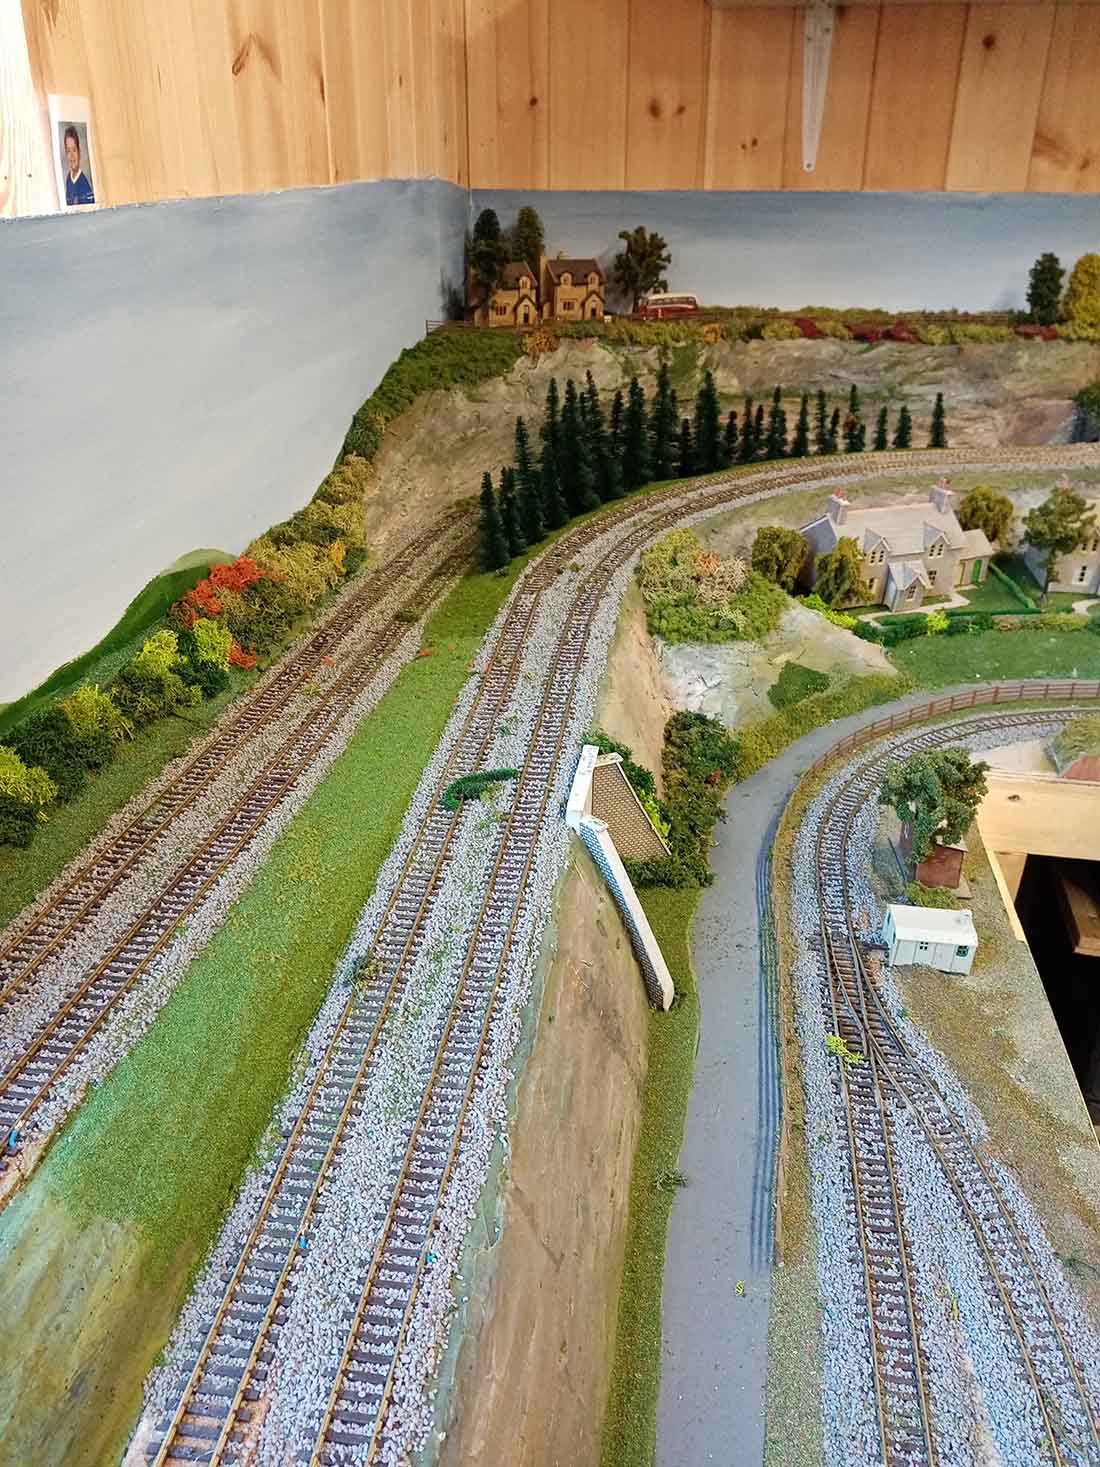 model railway embankment train layout shed